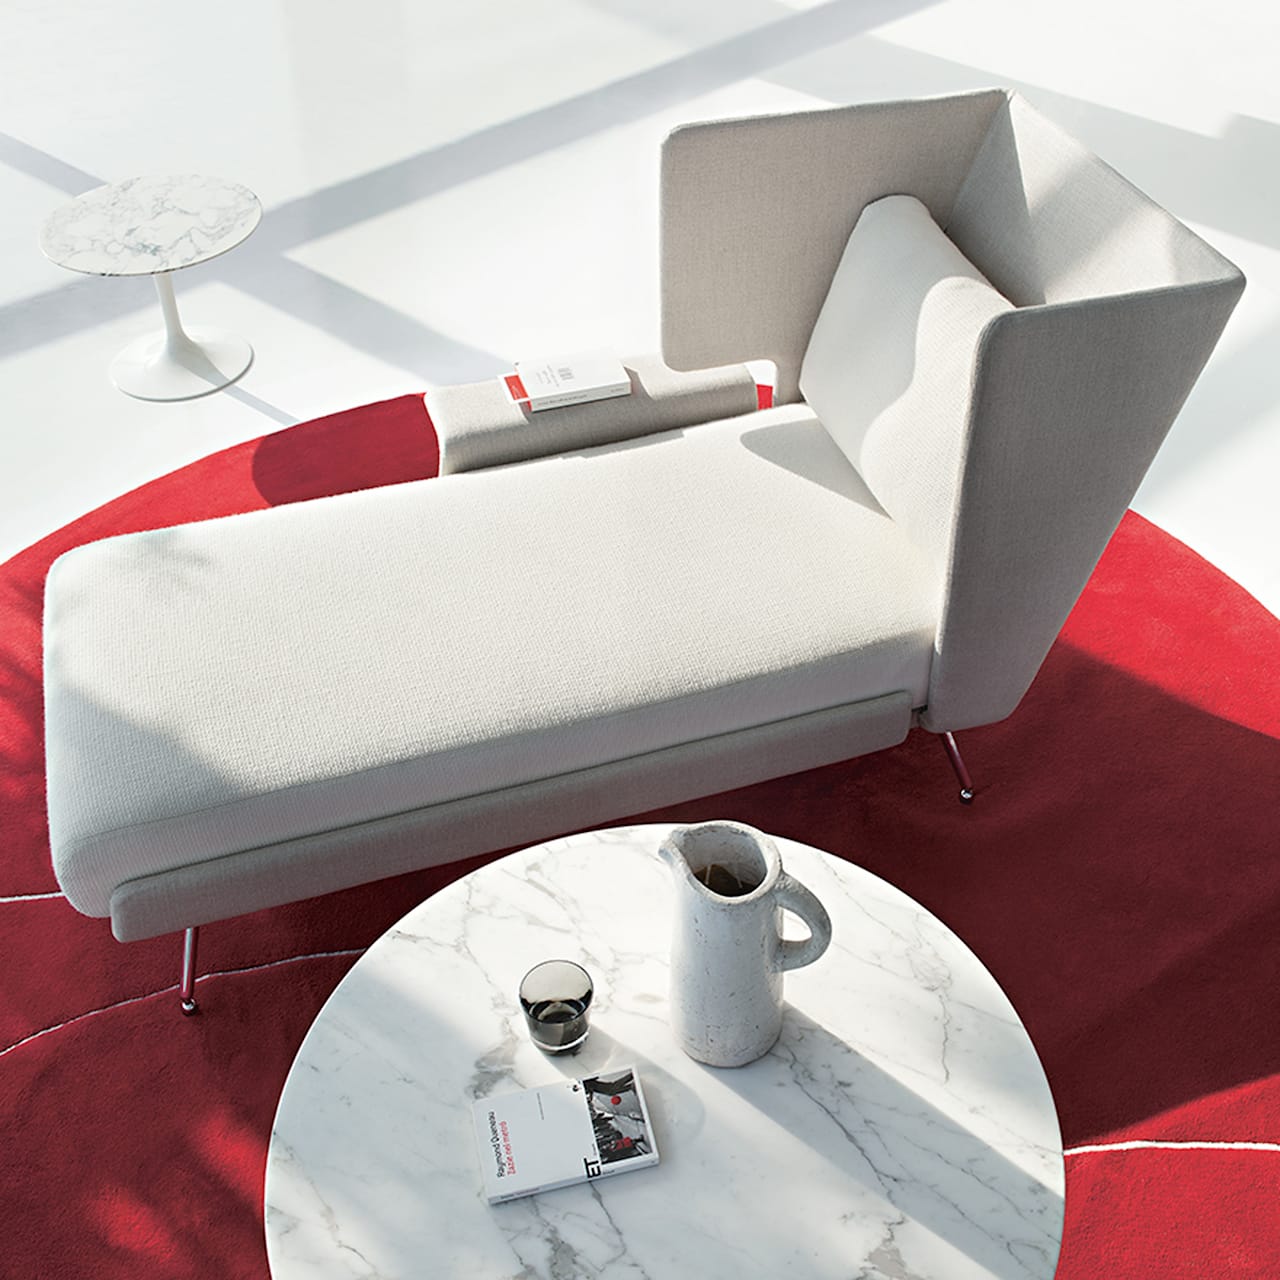 Saarinen Round Table White - Sofabord